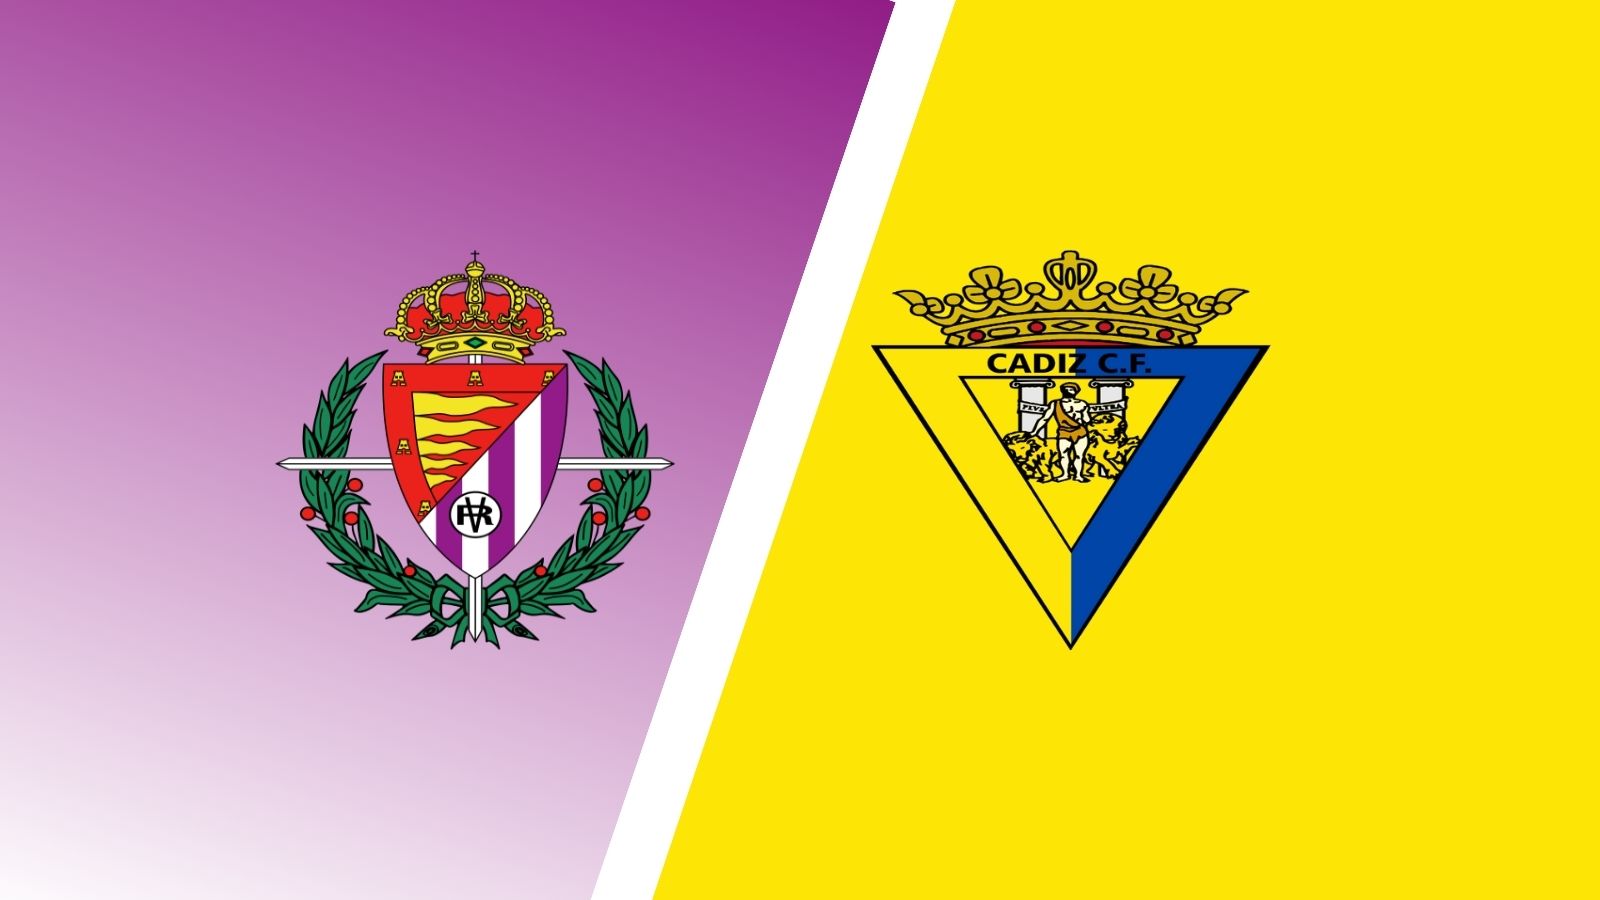 Valladolid Vs Cádiz Match Prediction and Betting Odds